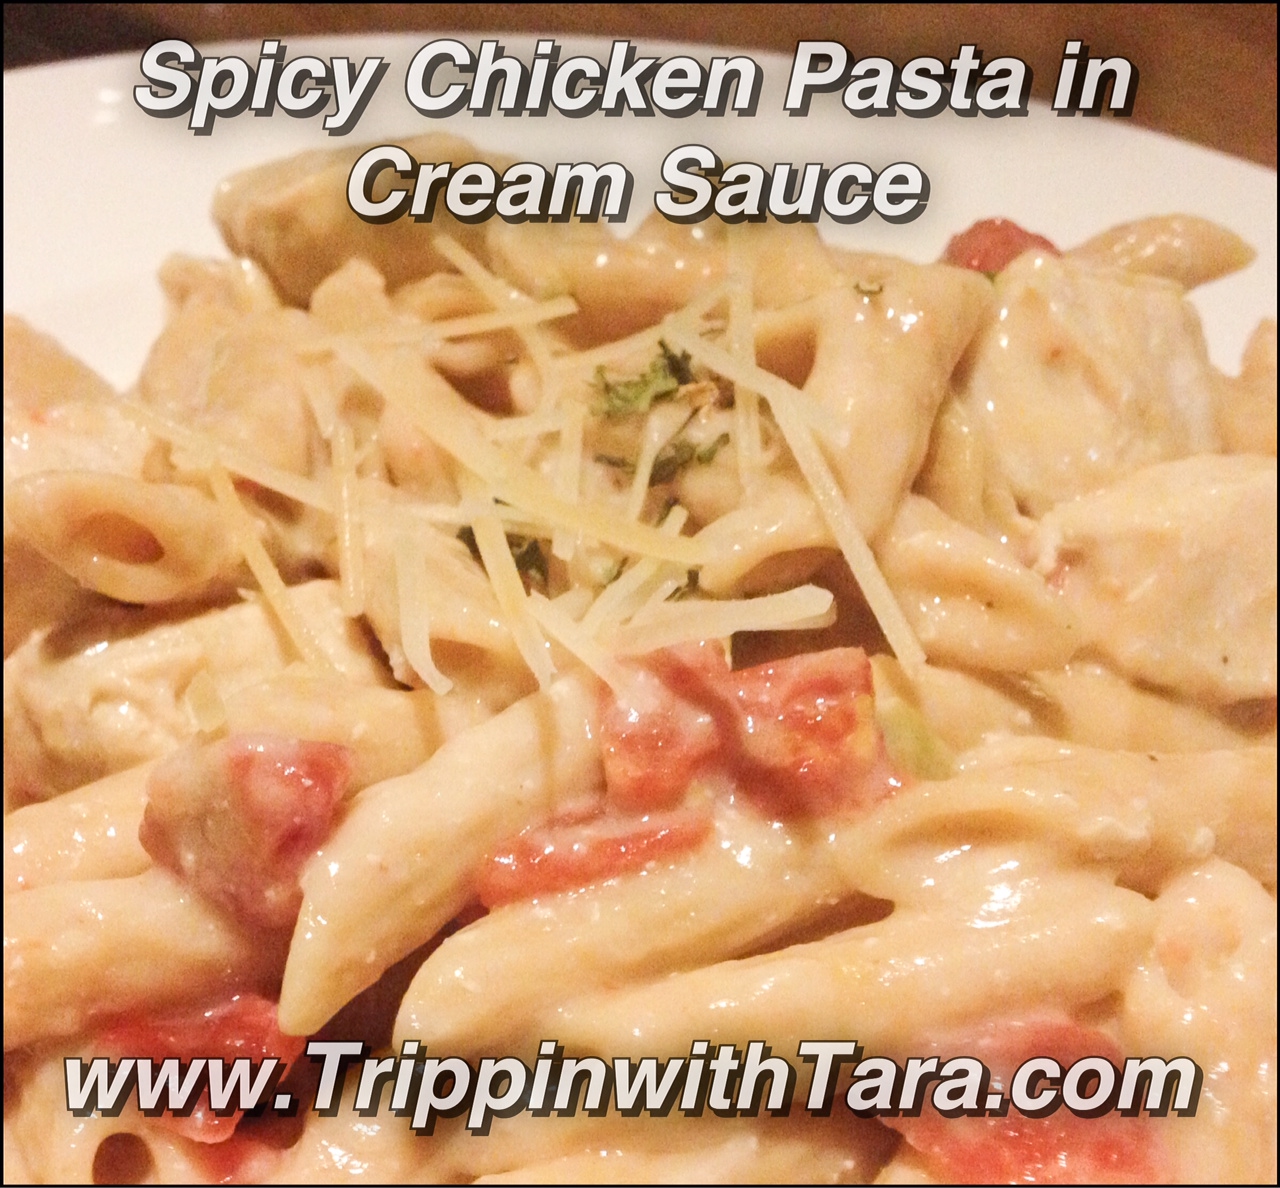 Spicy Chicken Pasta in Cream Sauce #recipe